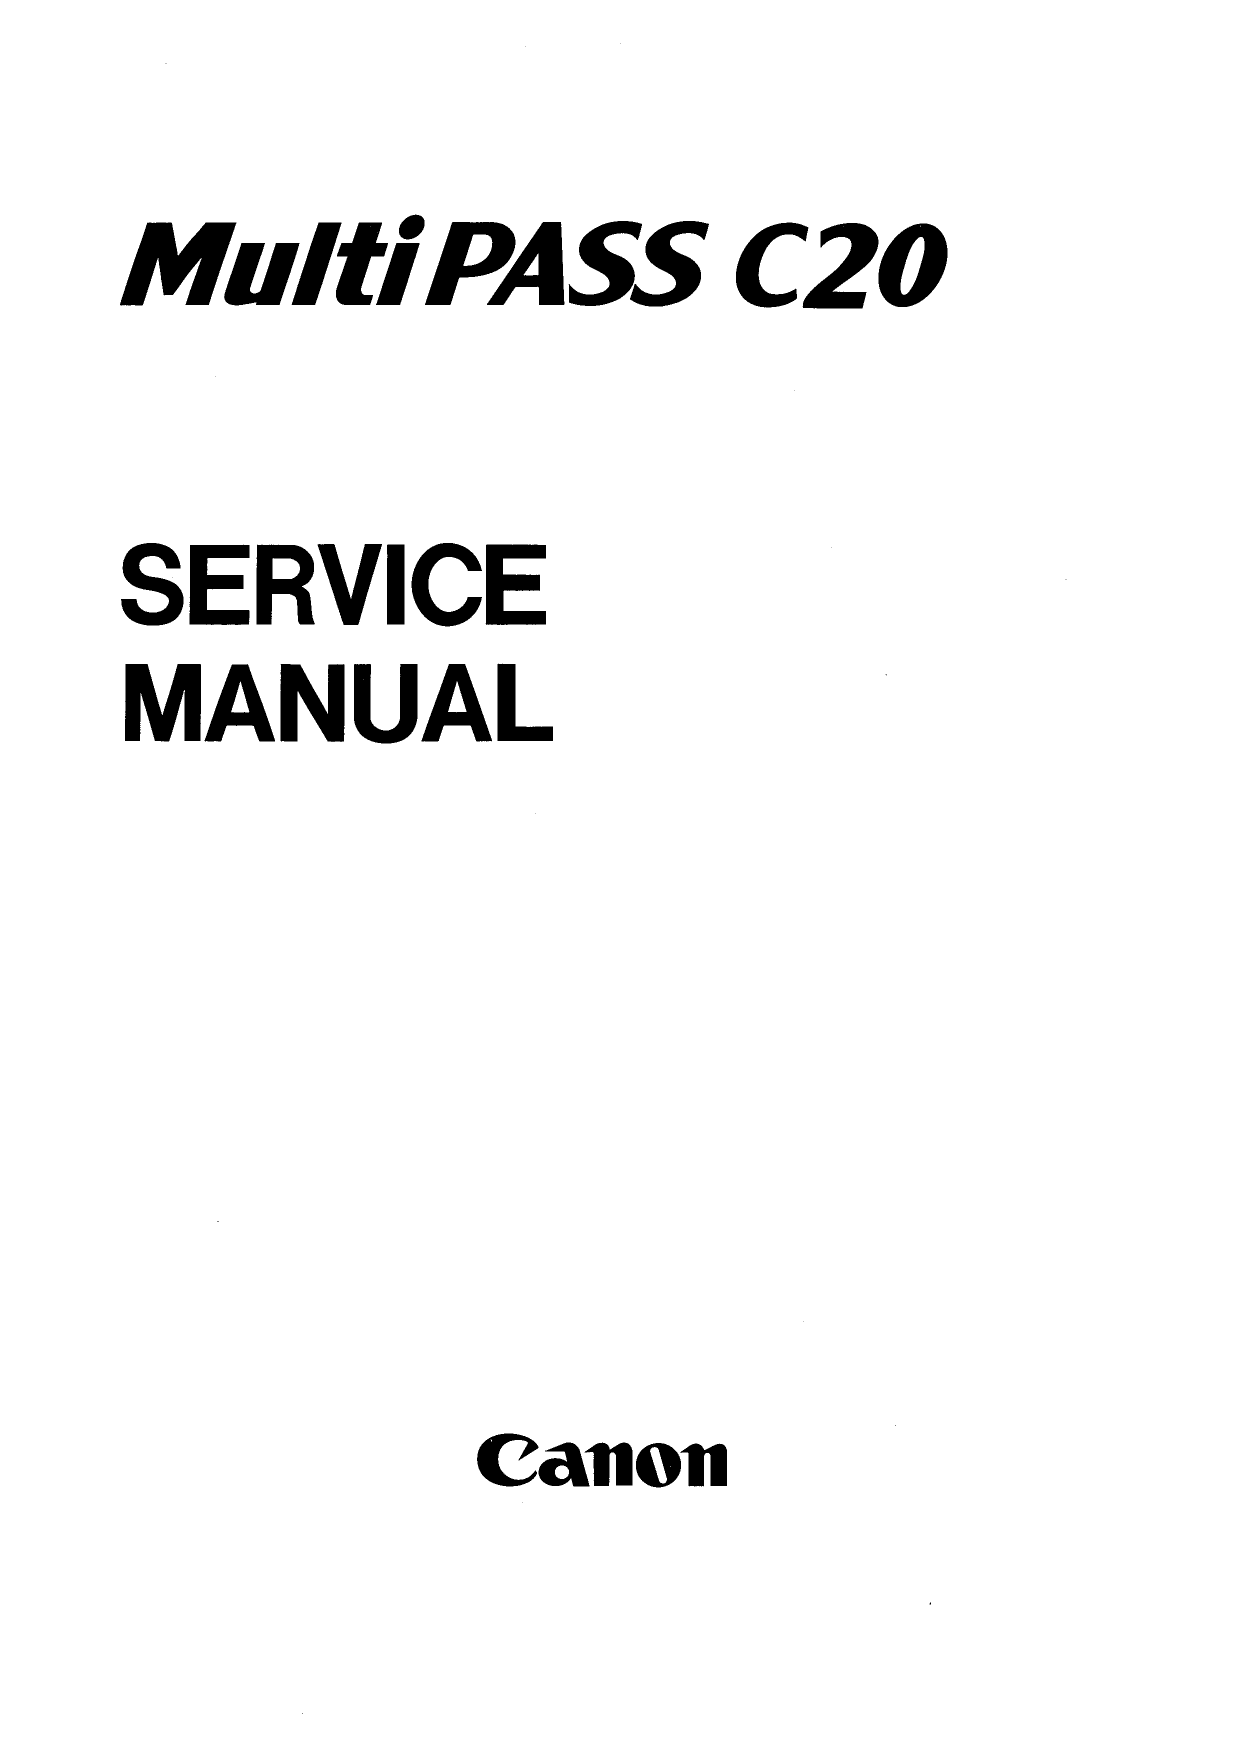 Canon MultiPASS MP-C20 Service Manual-1